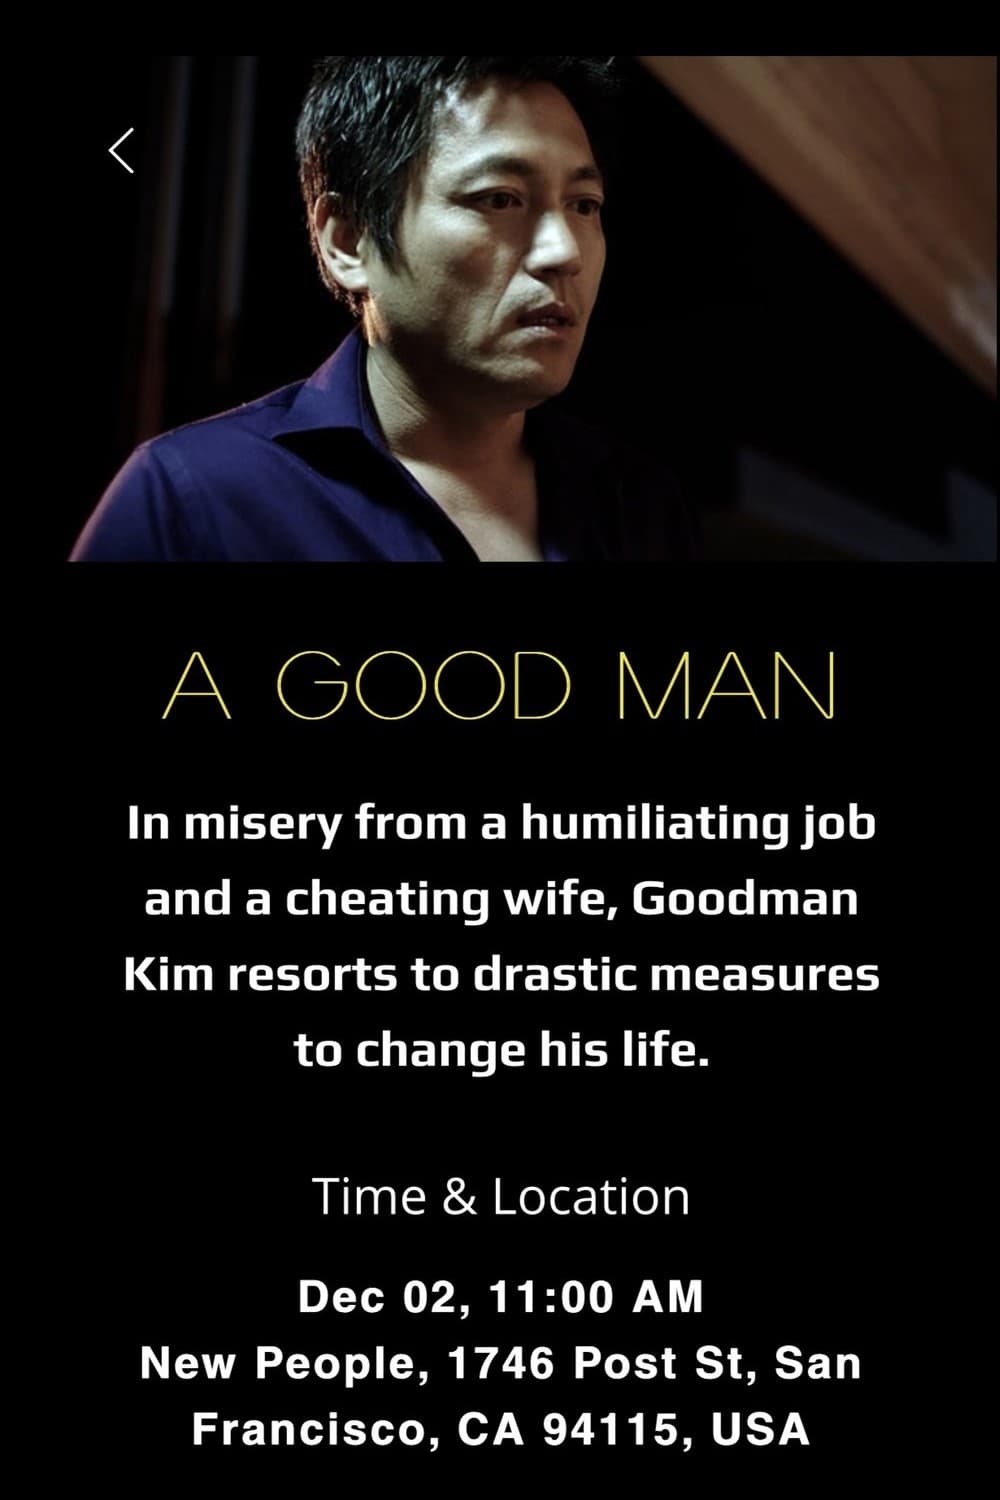 A Good Man